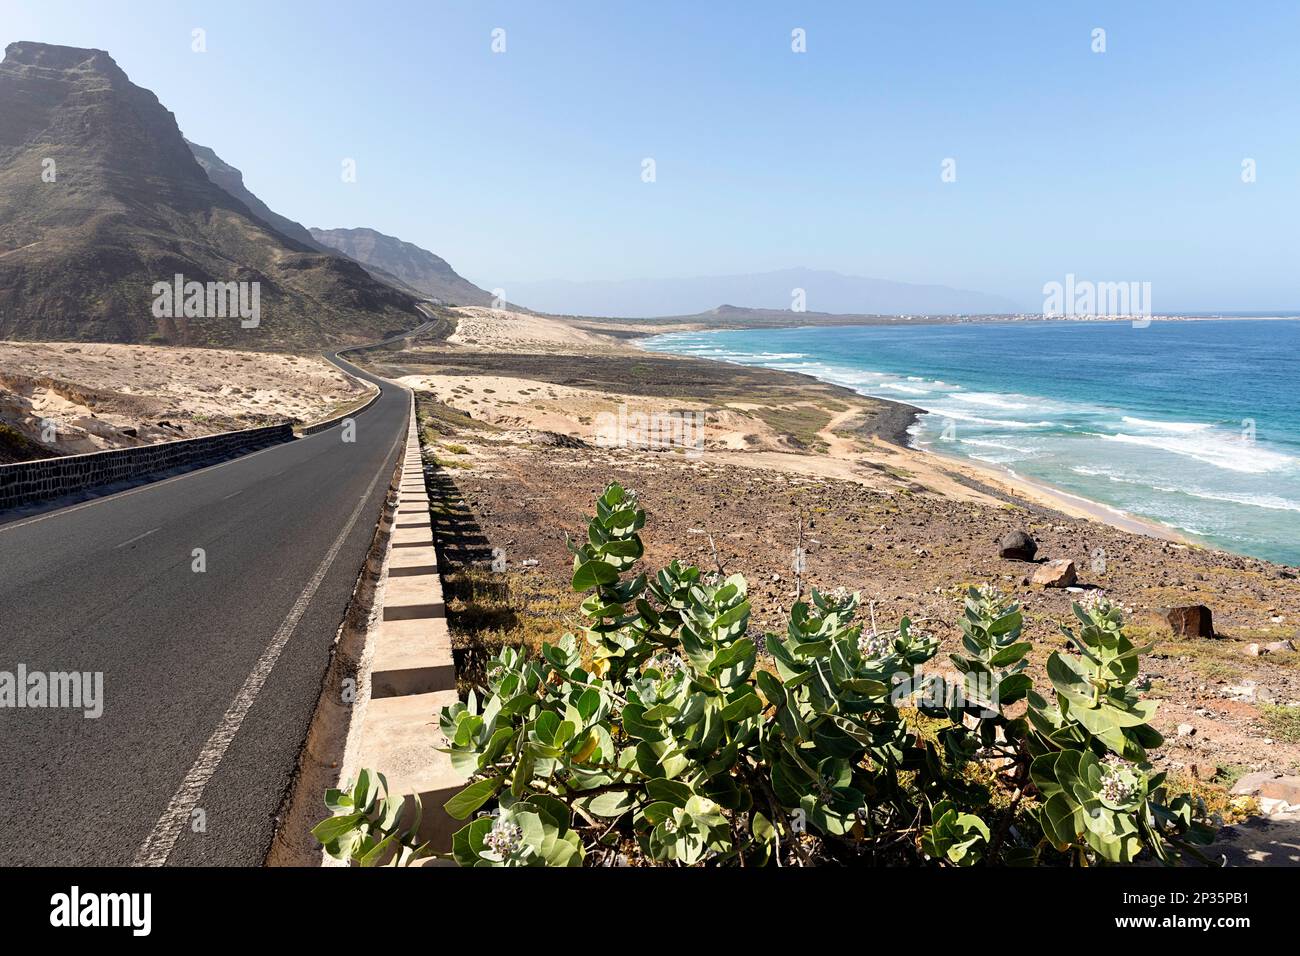 Scenic road from Baia das Gatas to Calhau (Parque Norte Baia das Gatas) with spectacular views of a coastline and mountains, Sao Vicente, Cabo verde Stock Photo